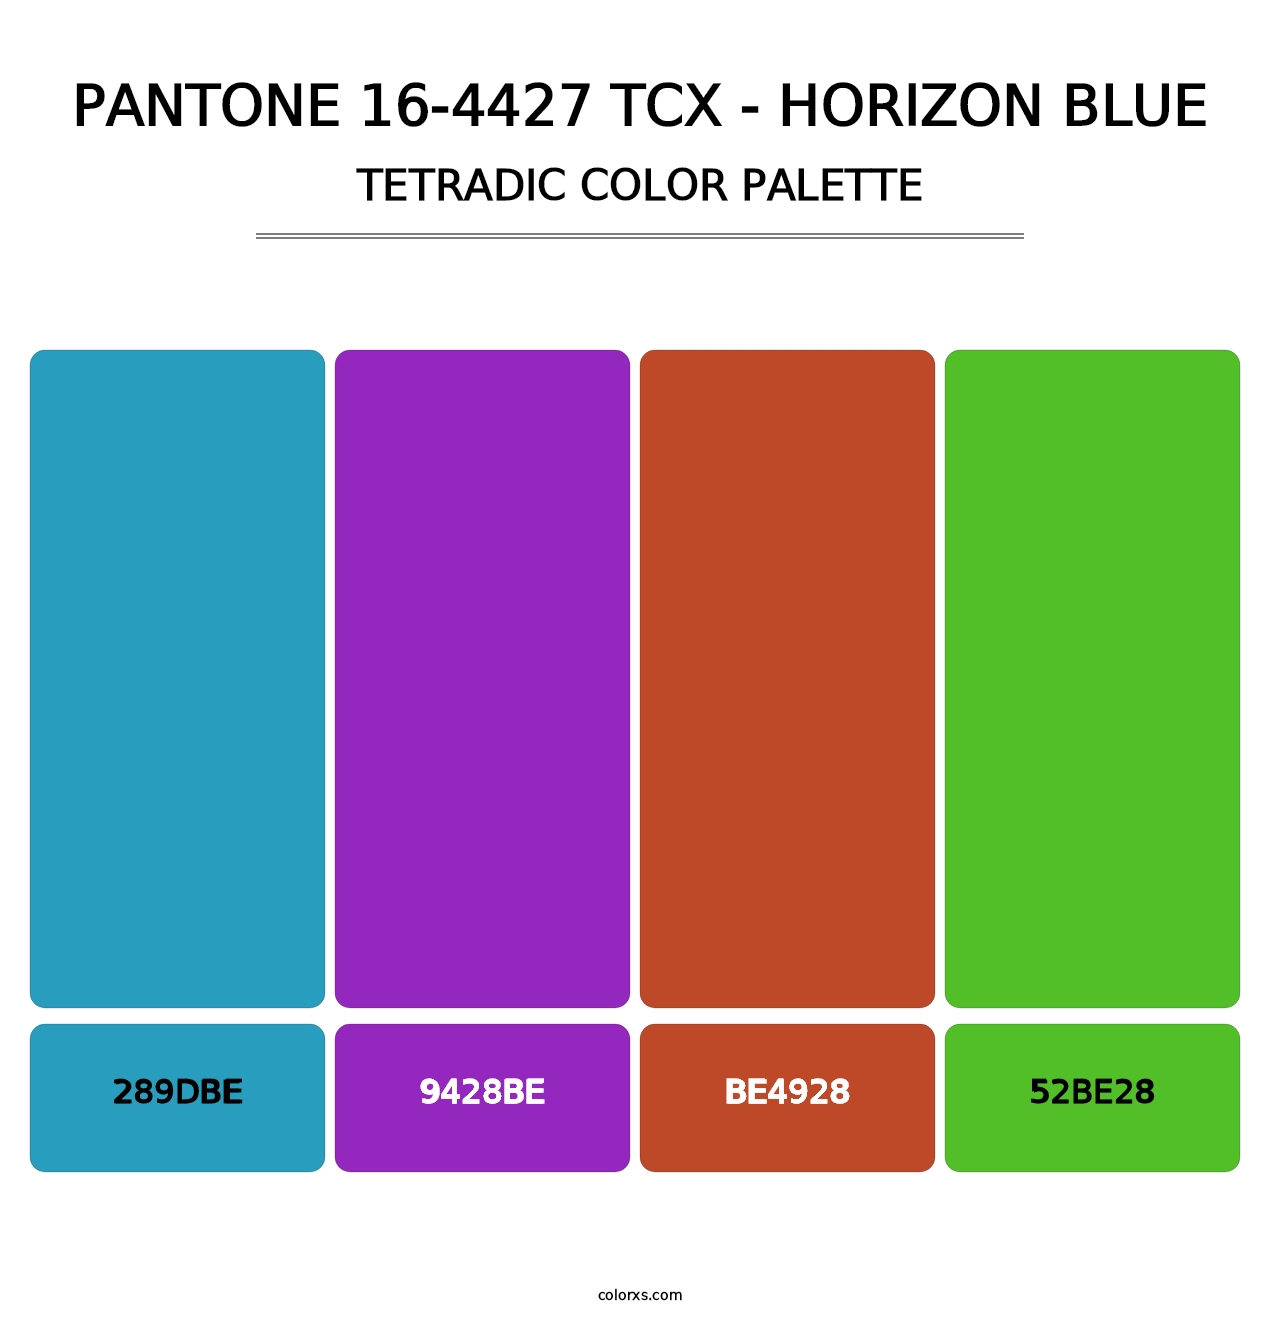 PANTONE 16-4427 TCX - Horizon Blue - Tetradic Color Palette